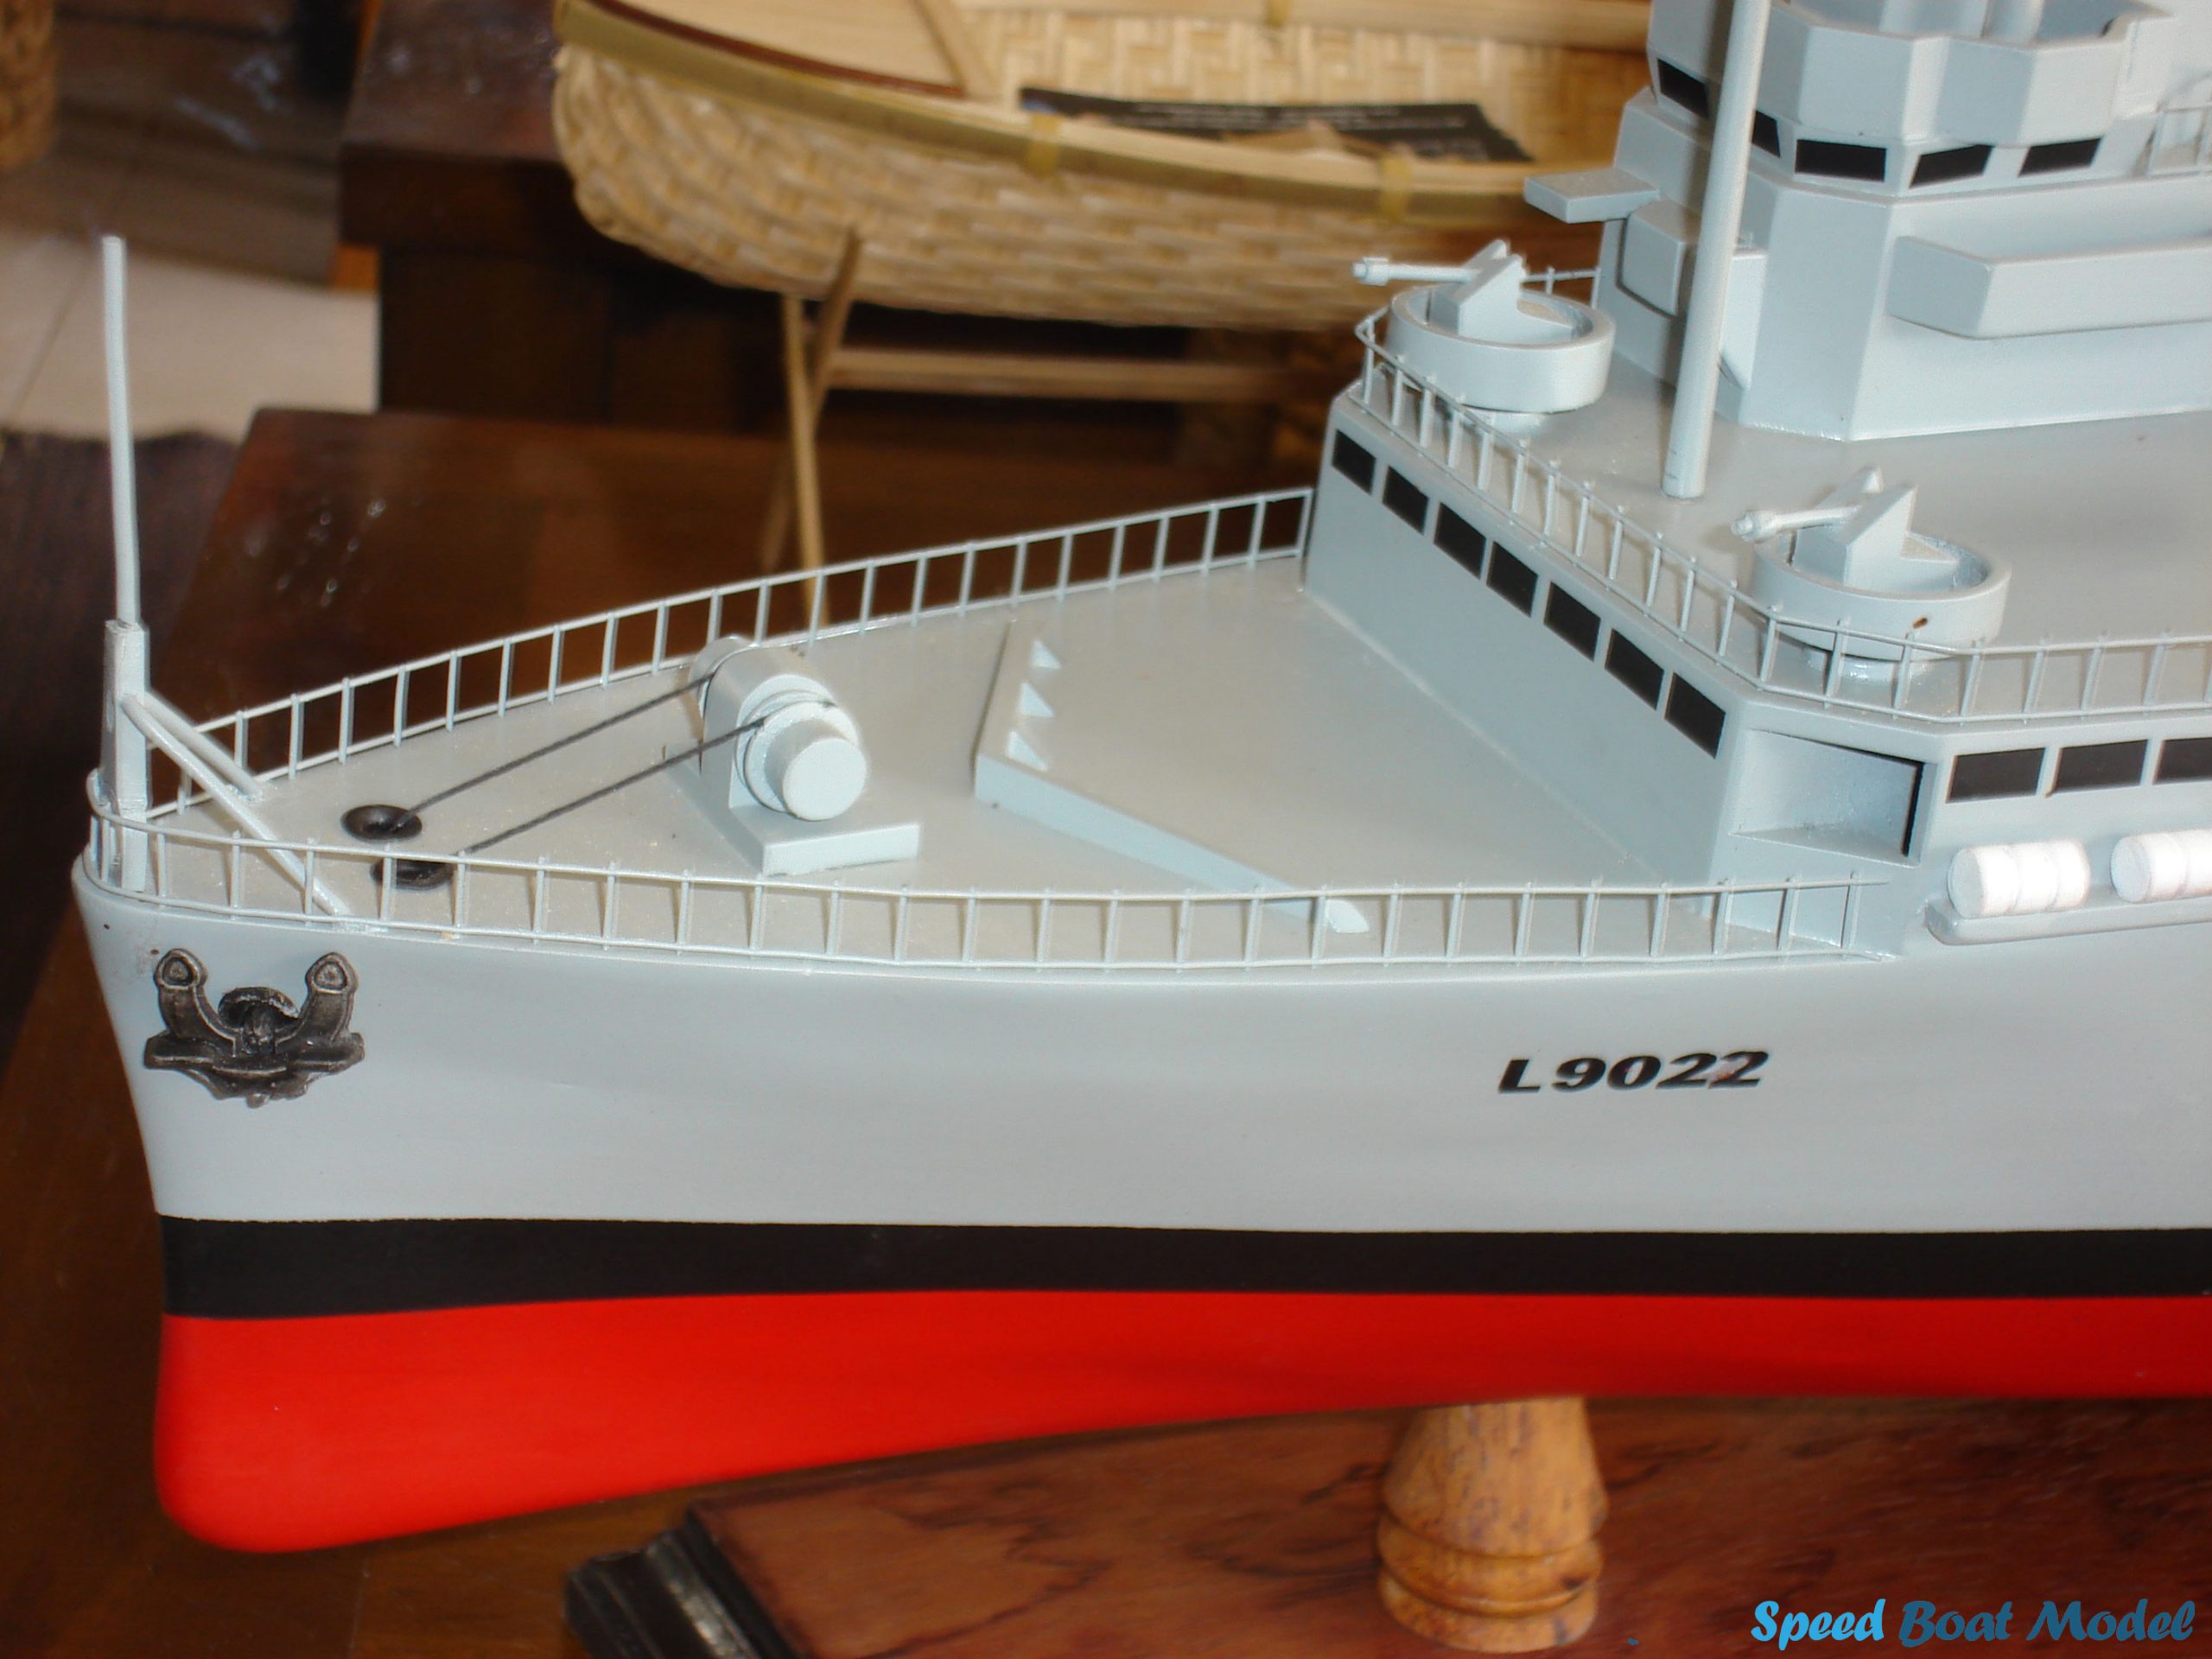 Tcd Orage Warship Model 27.5